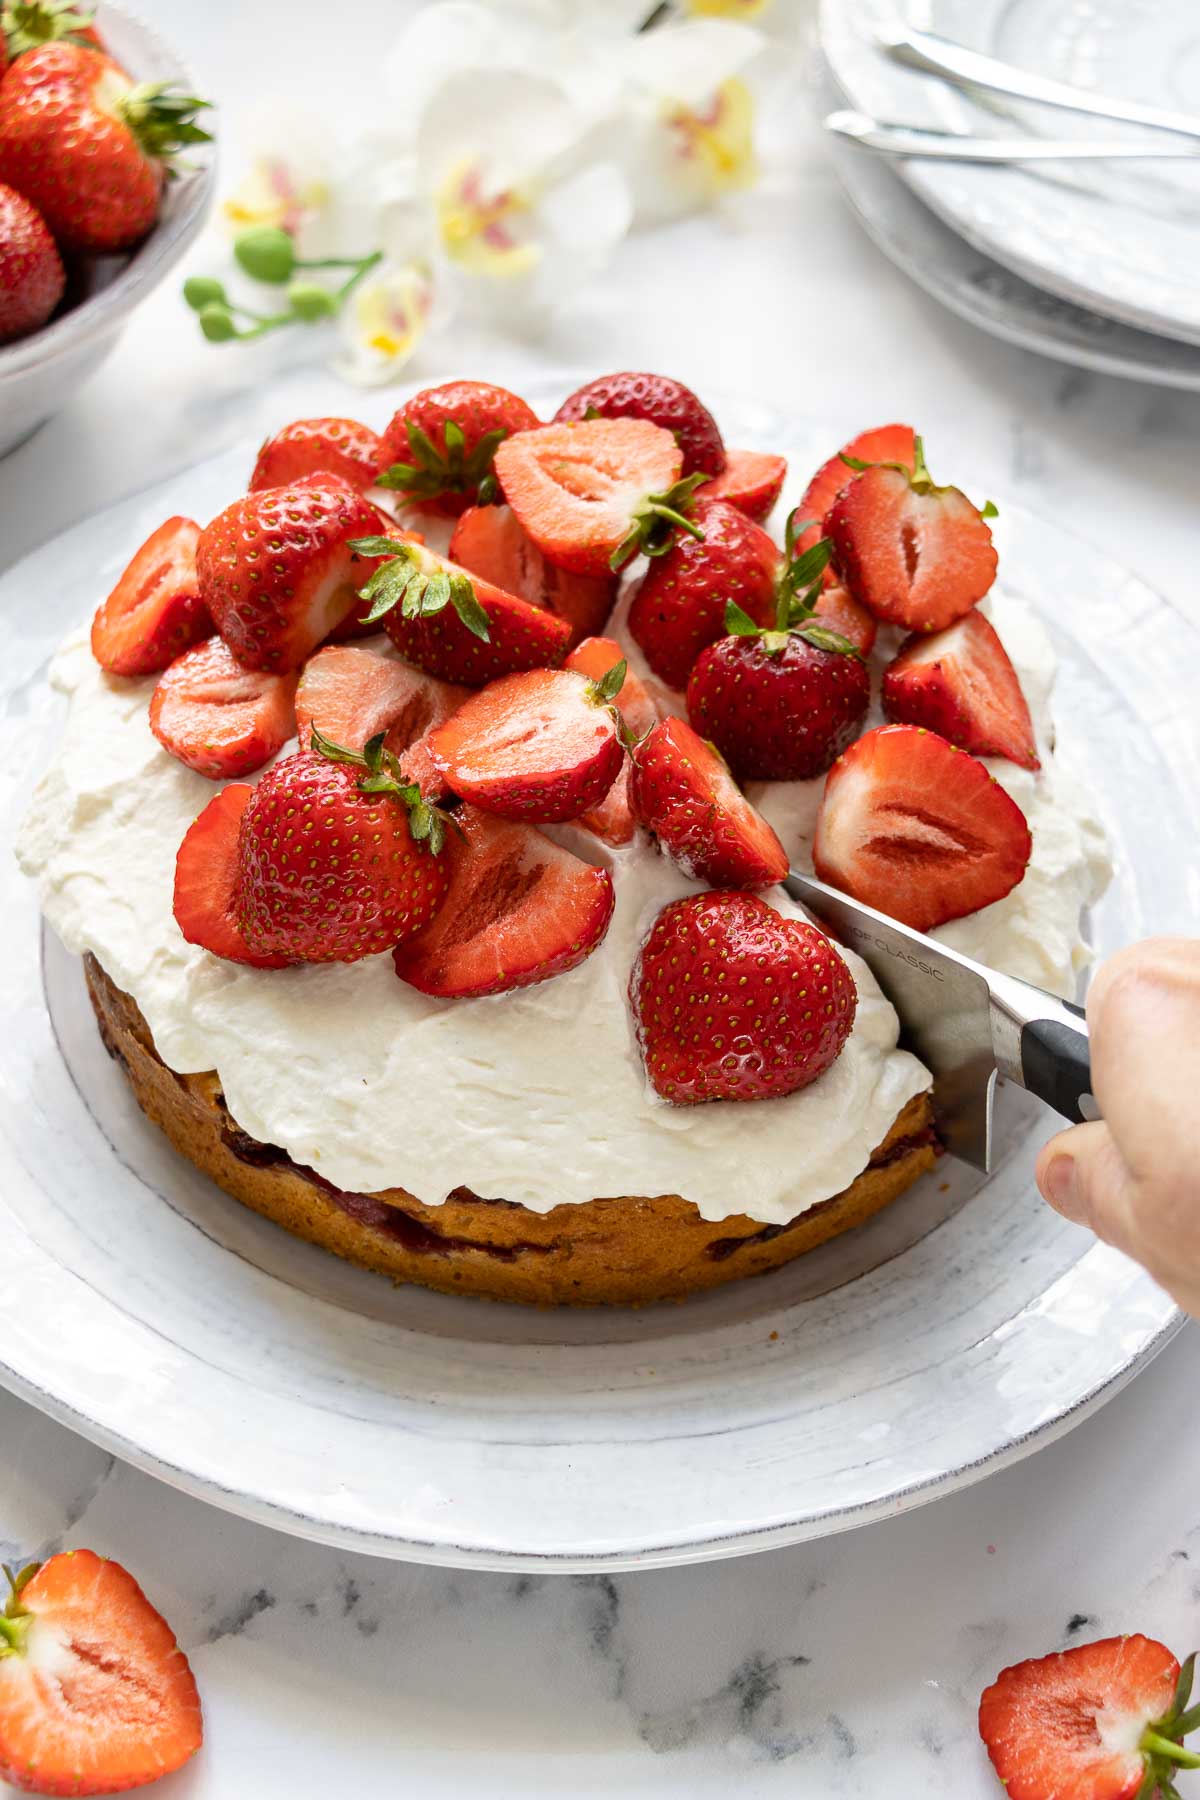 Lemon Yoghurt Cake with Strawberries